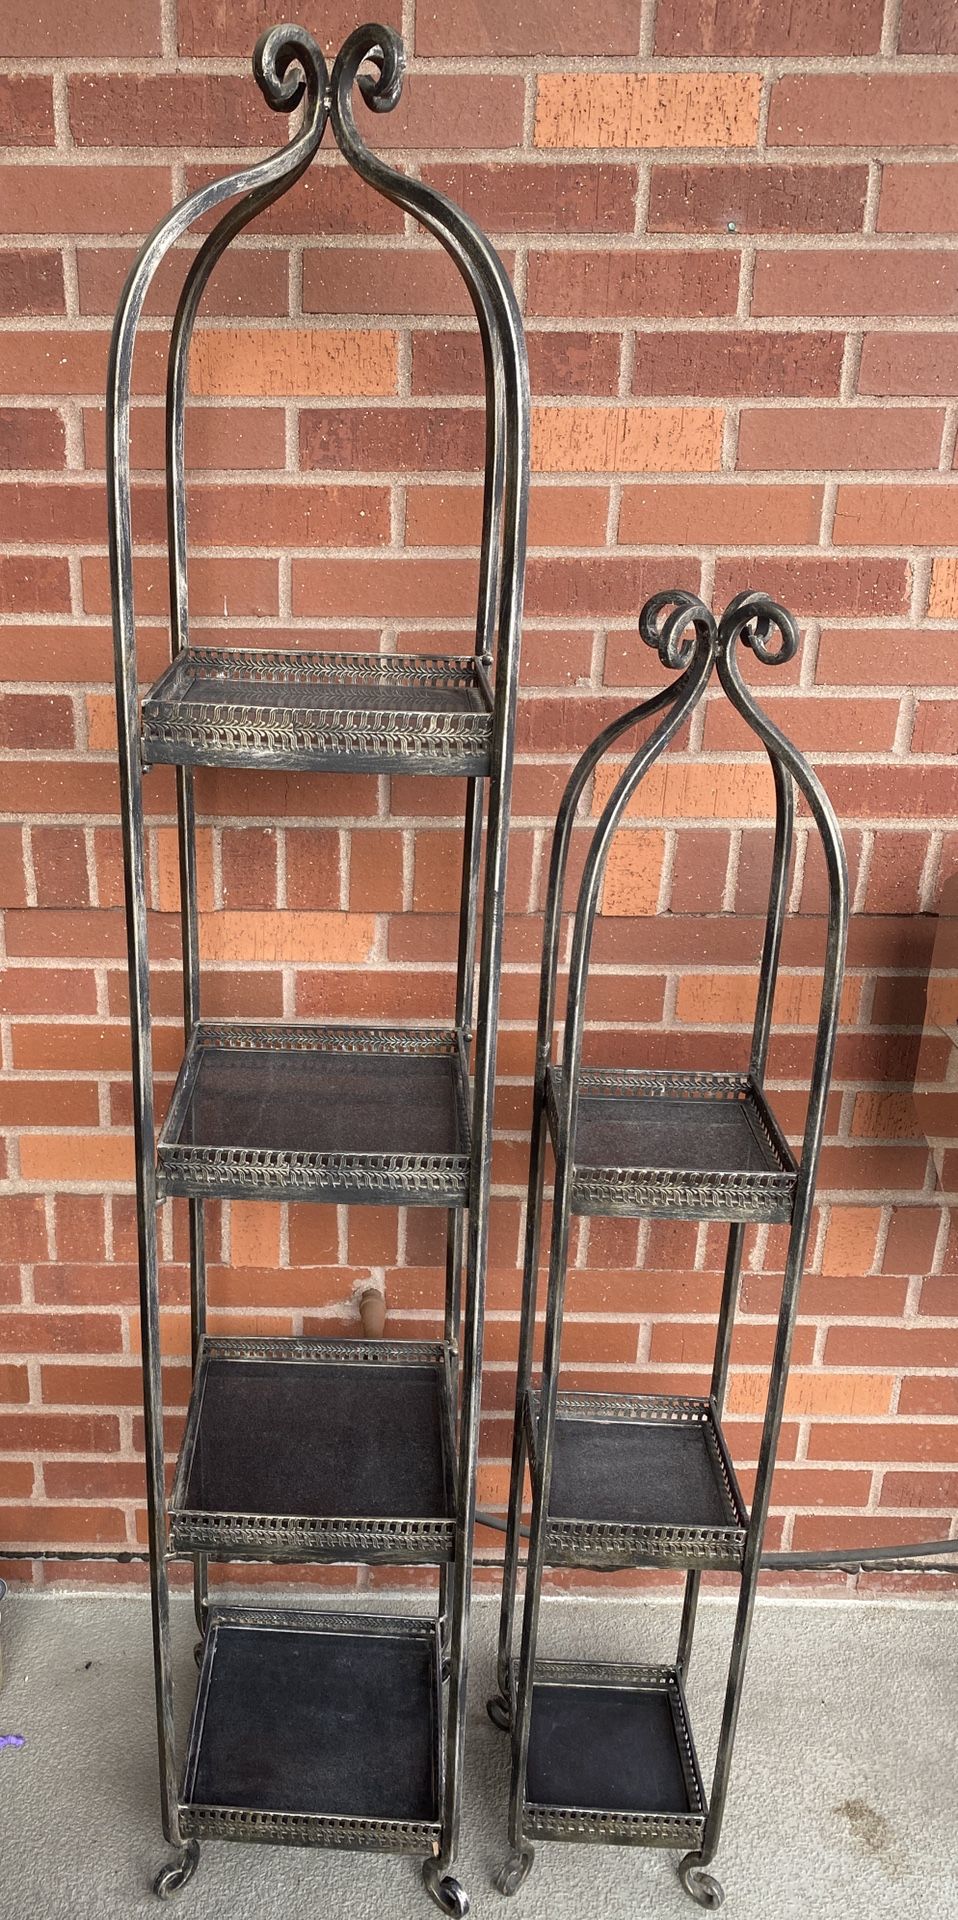 Metal and stone indoor/outdoor decorative shelves